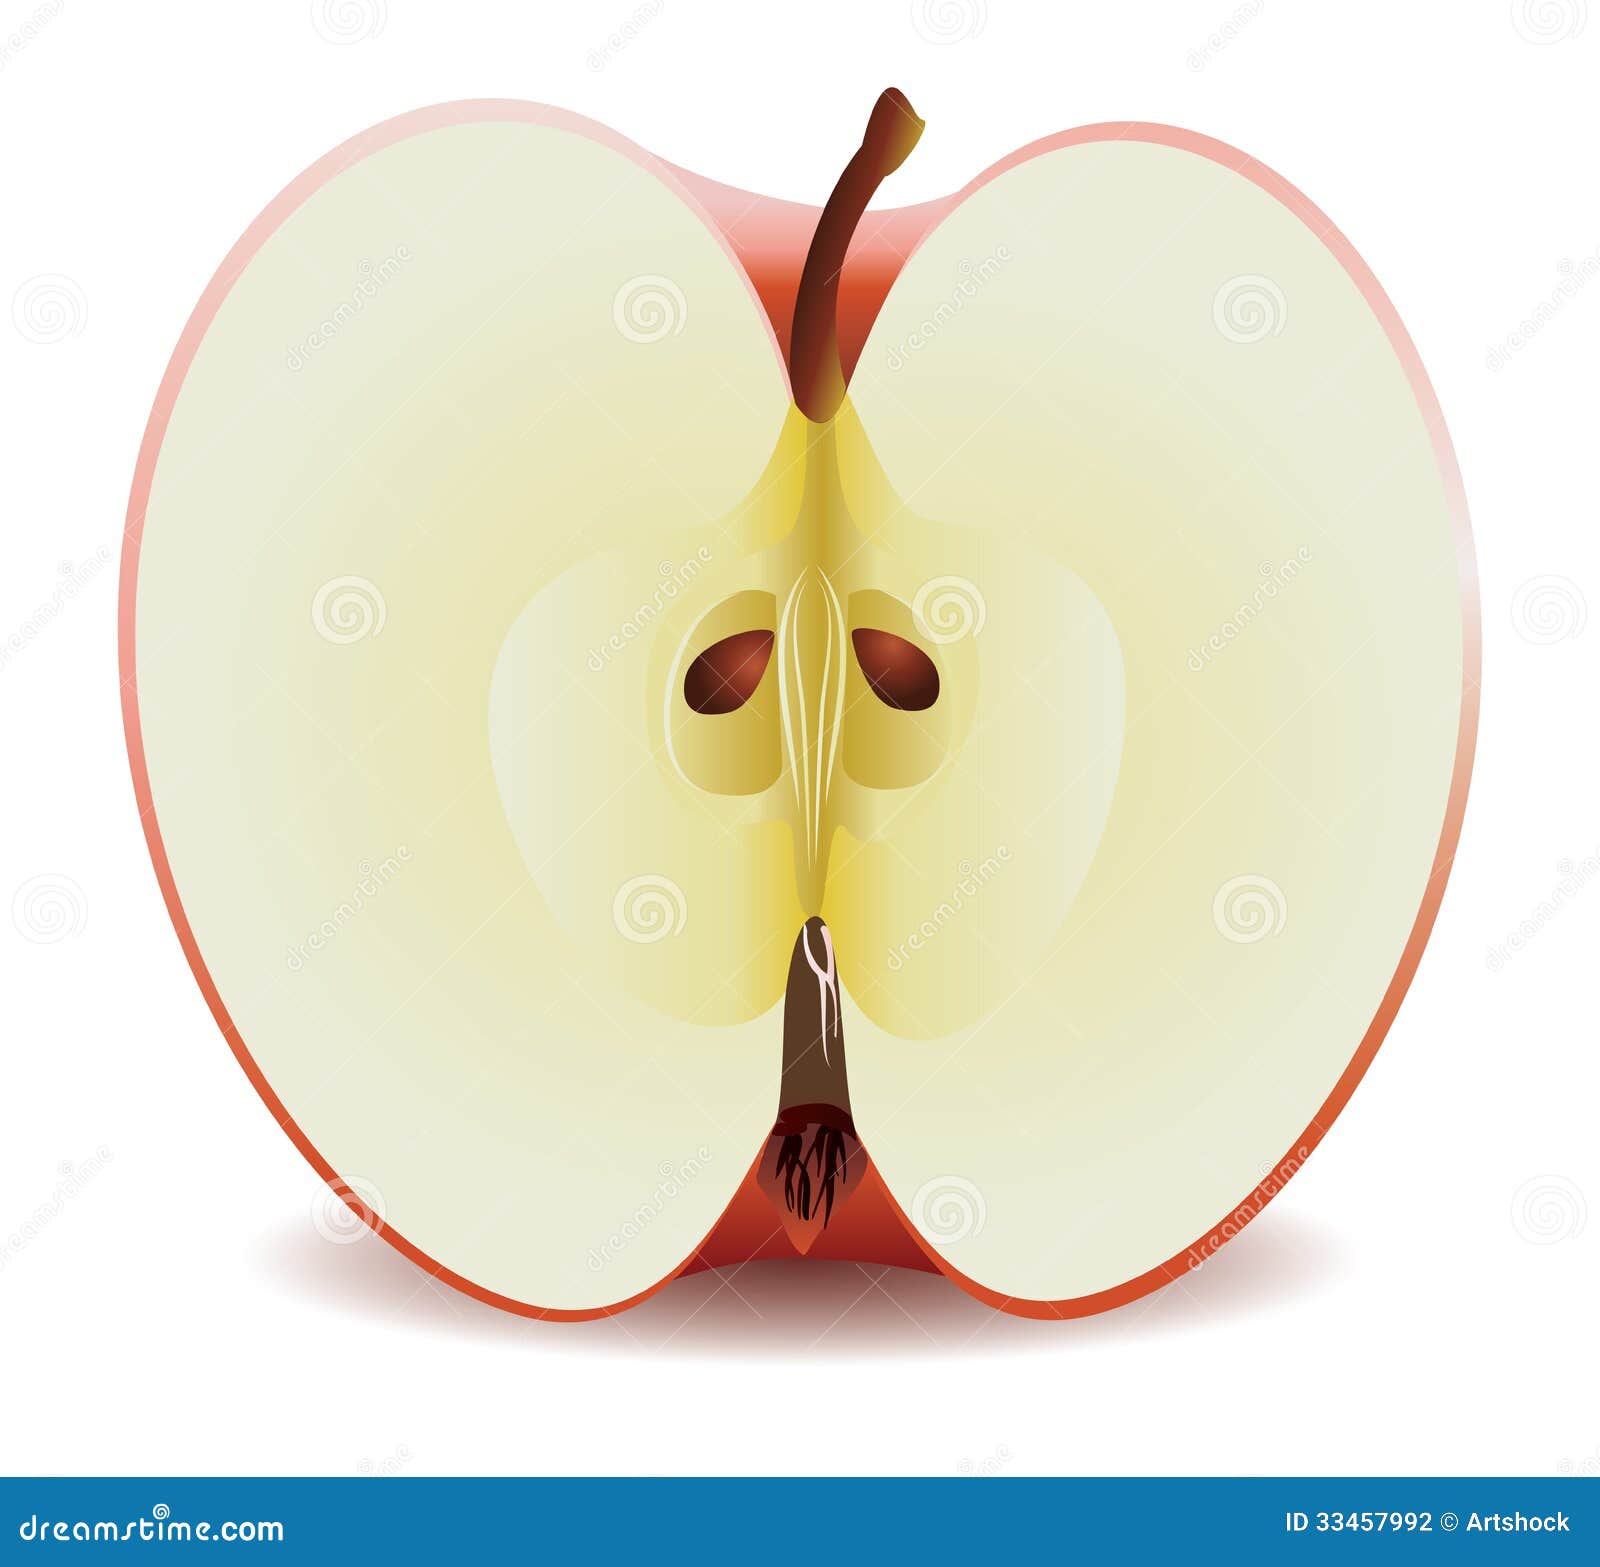 apple half clipart - photo #7